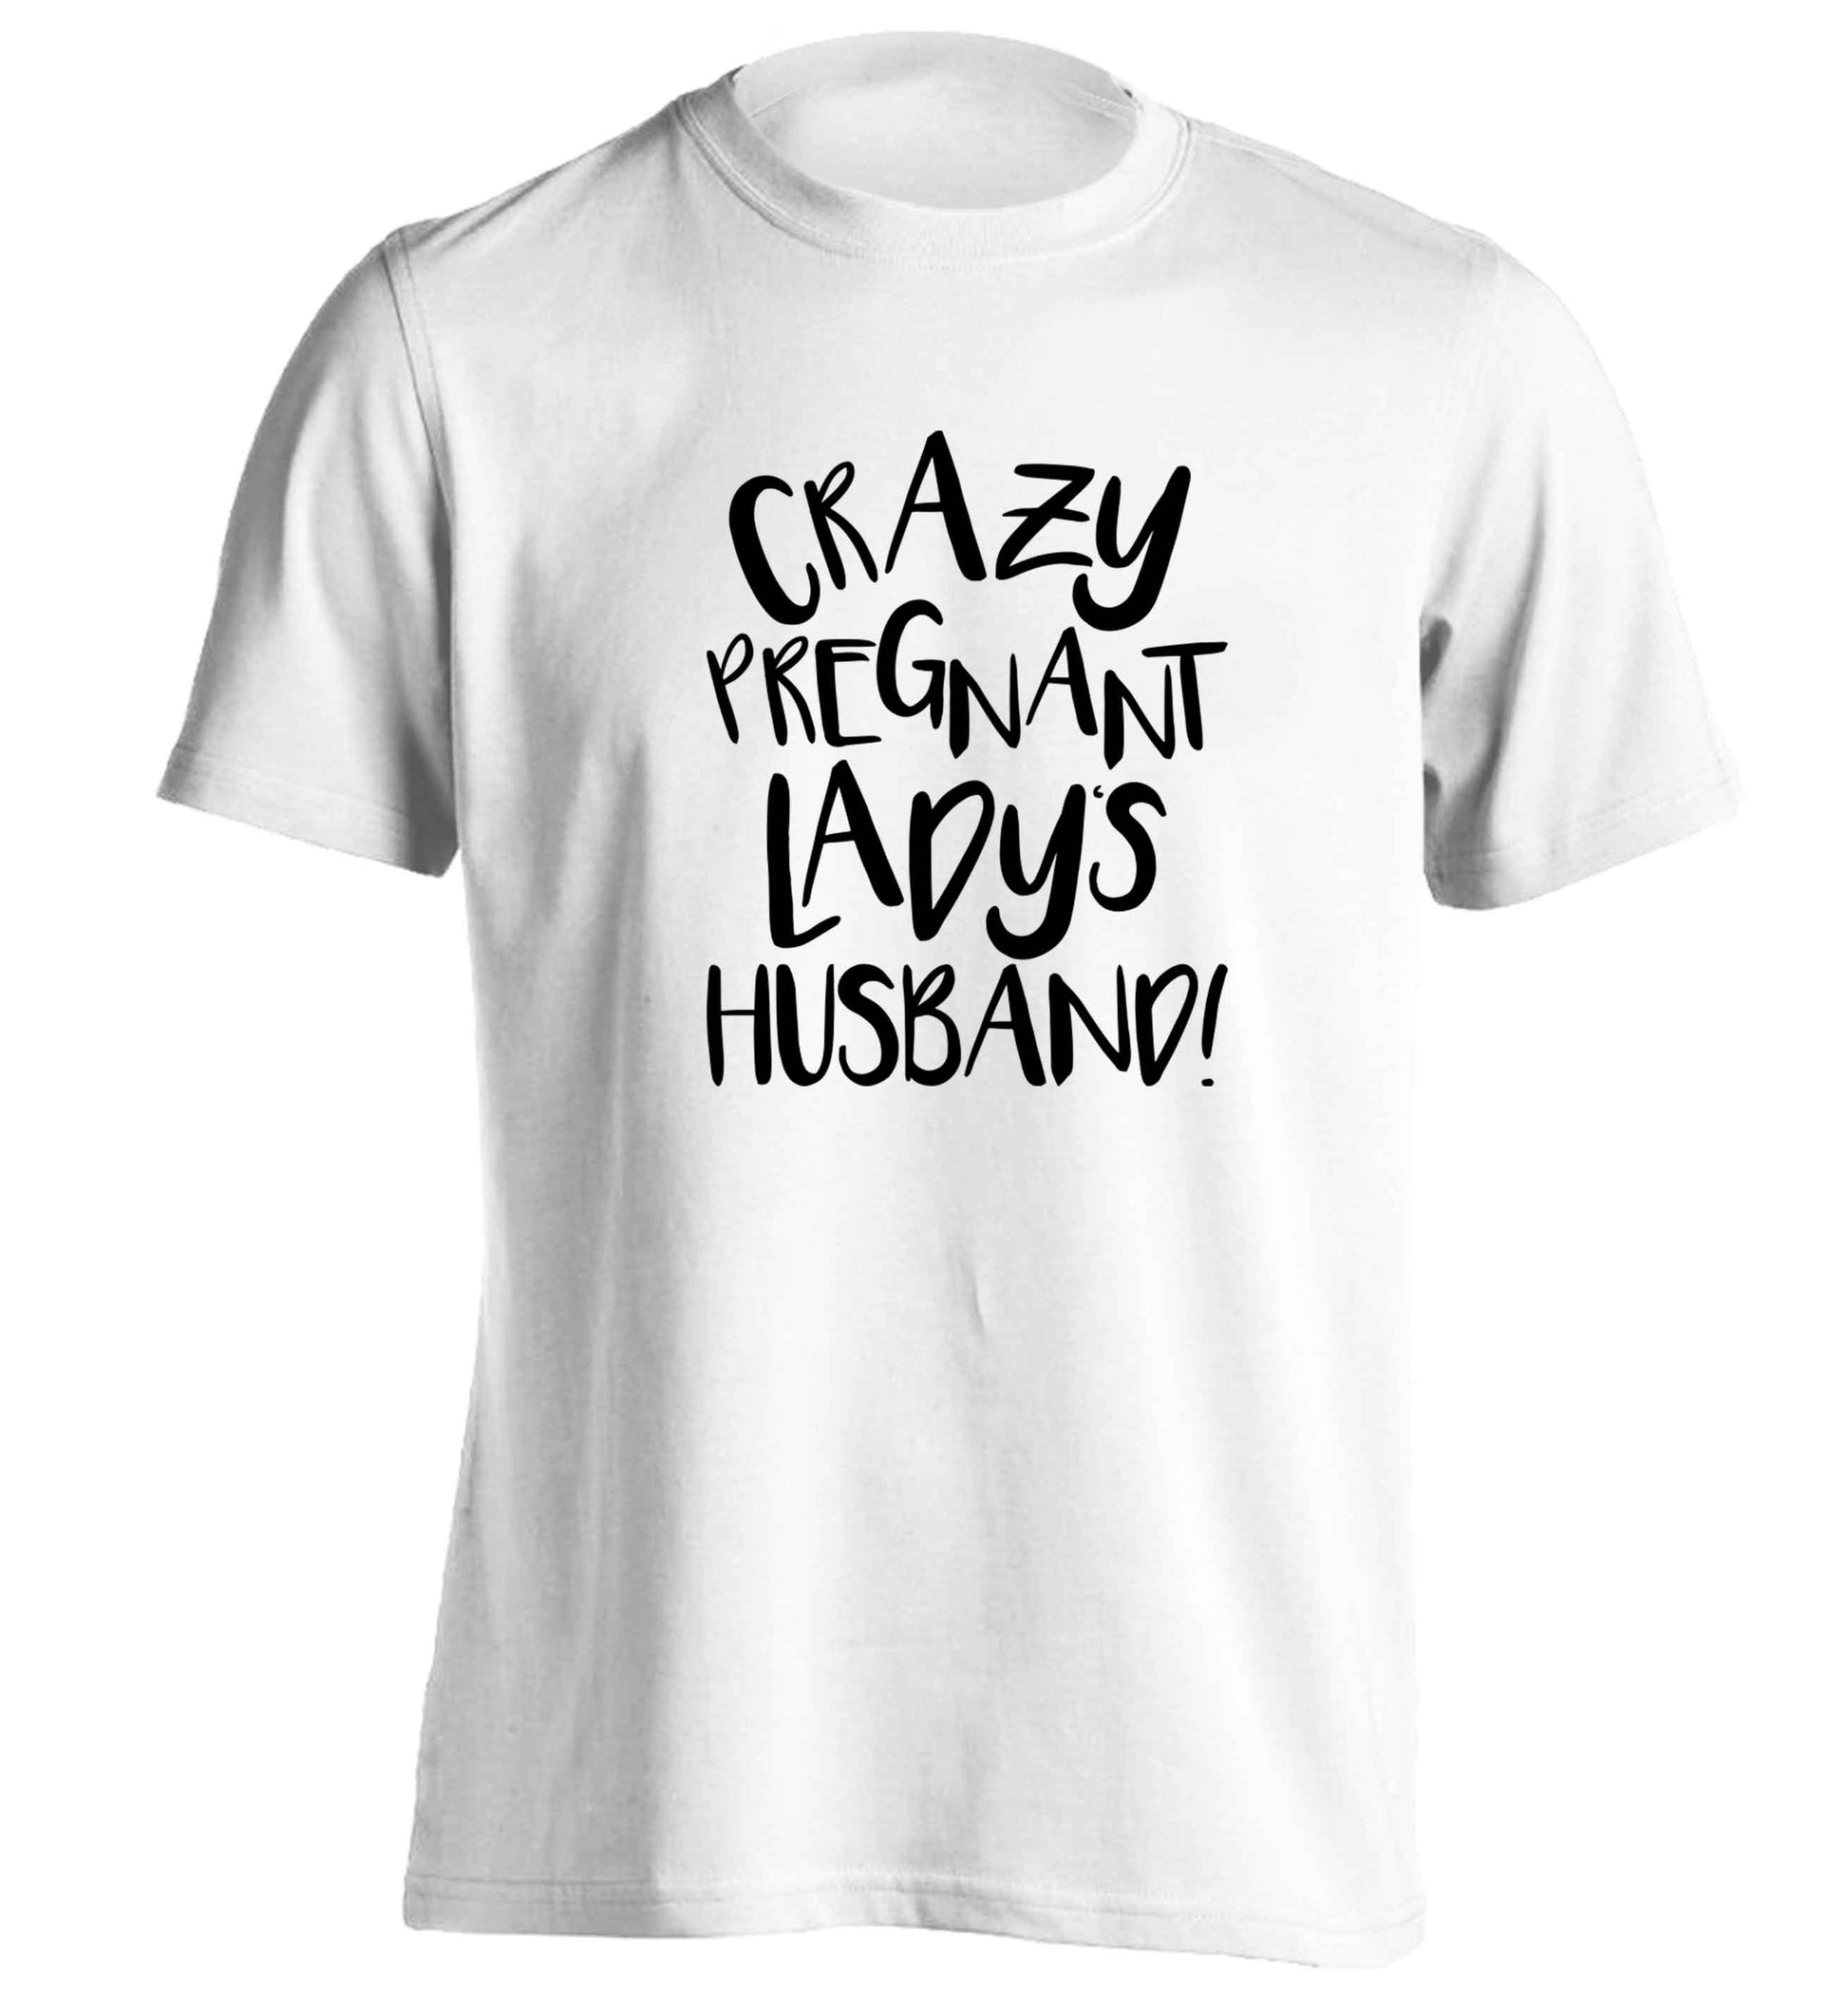 Crazy pregnant lady's husband adults unisex white Tshirt 2XL